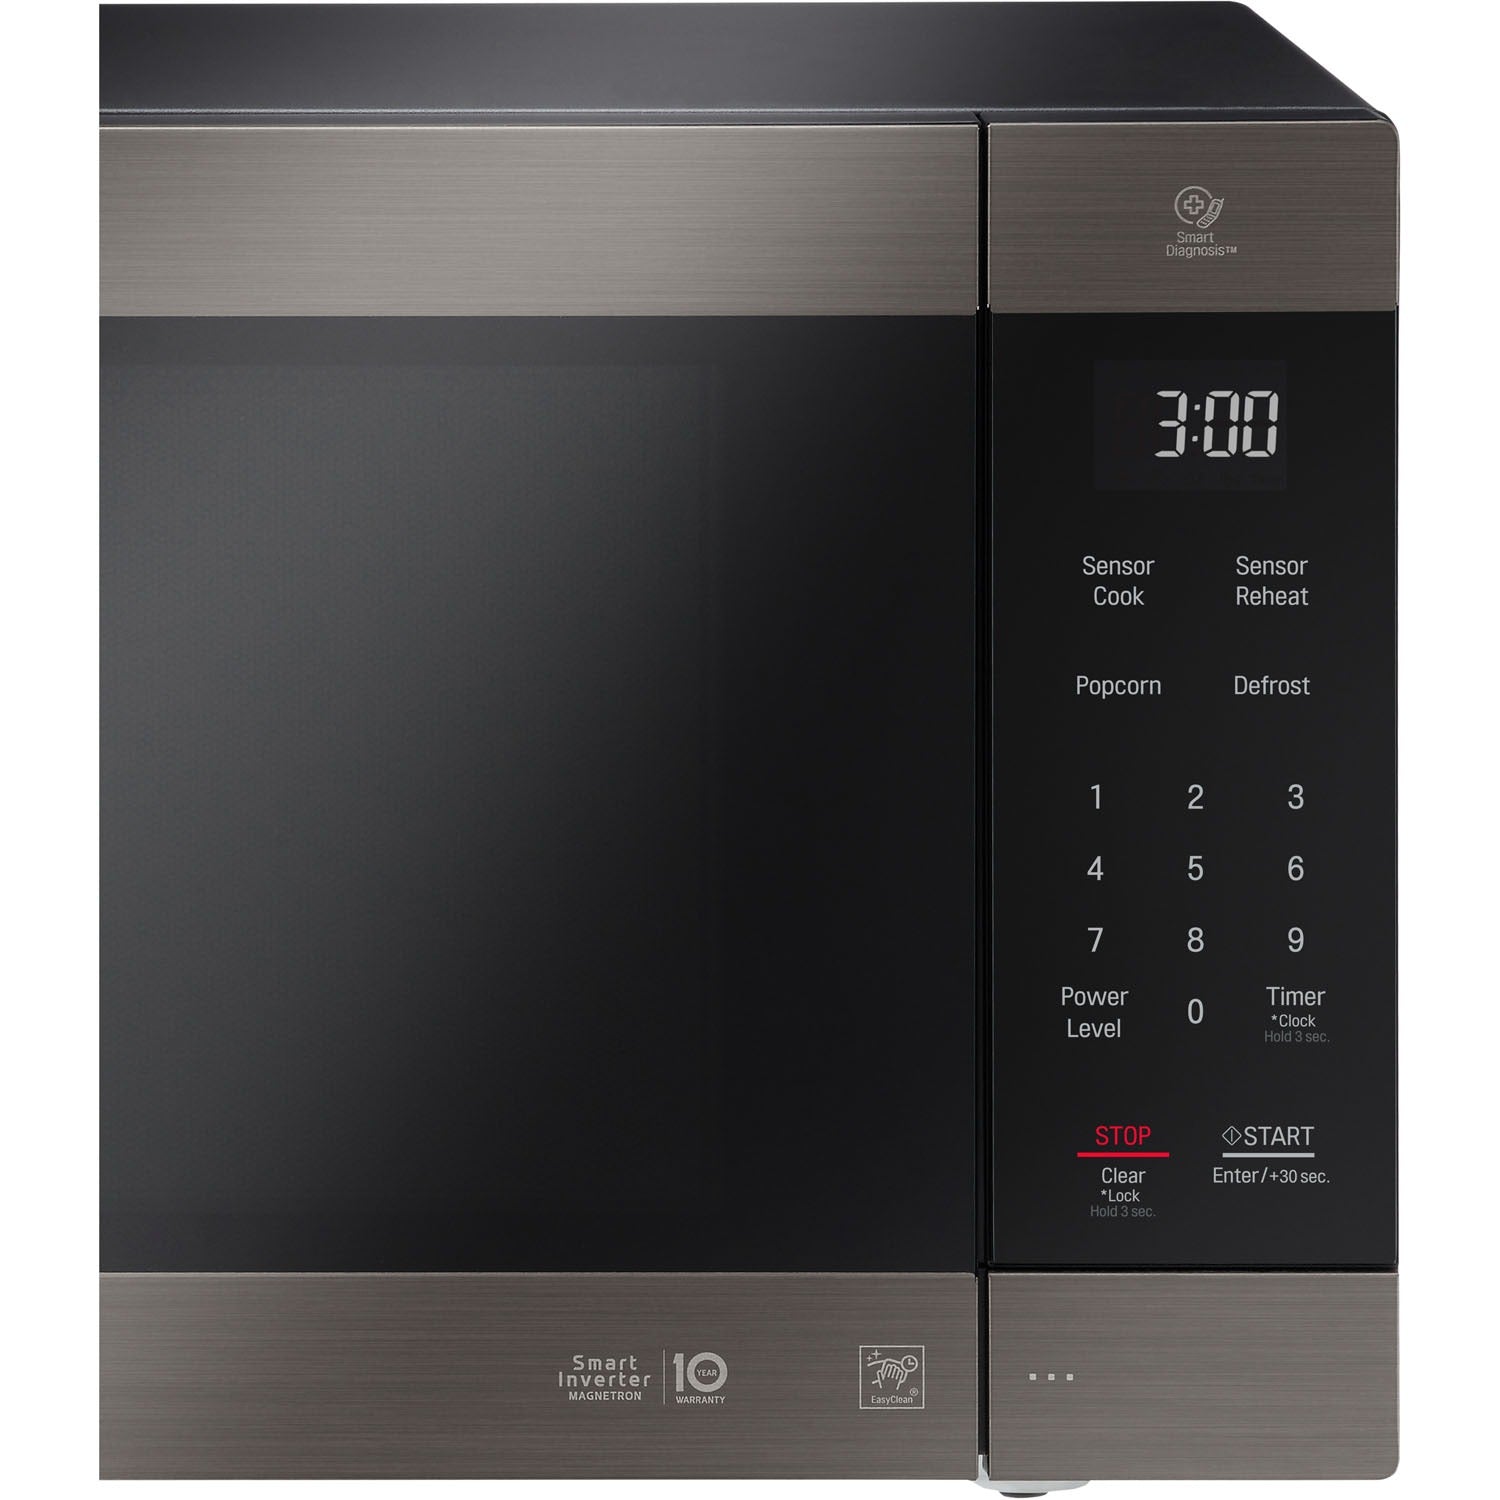 LG NeoChef 2 Cu. Ft. 1200W 24 in. Countertop Microwave in Black Stainless Steel (LMC2075BD)